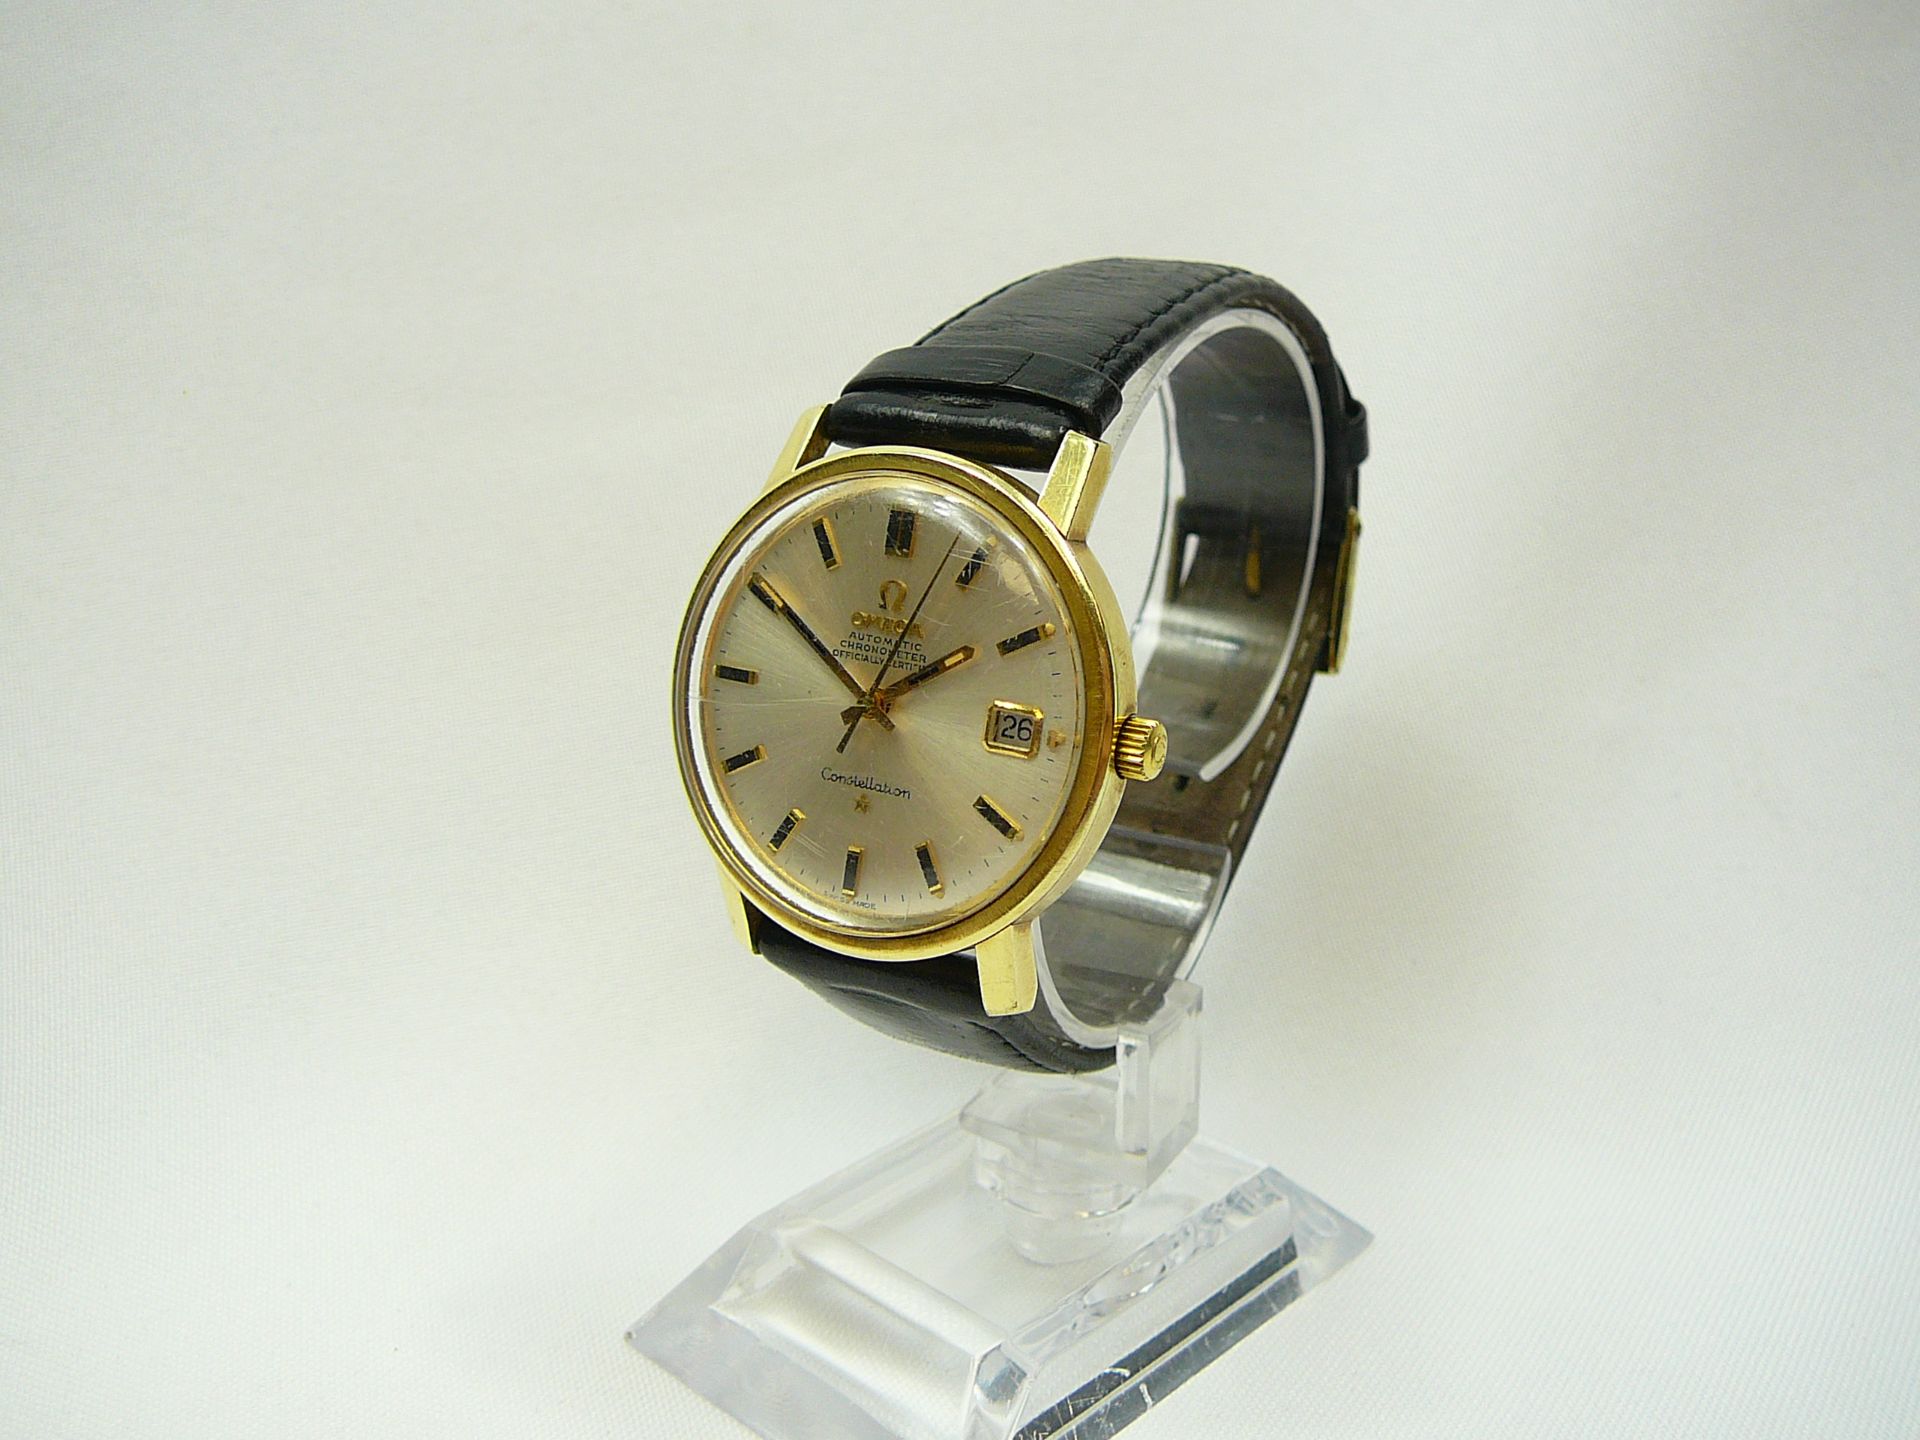 Gents Vintage Omega Wrist Watch